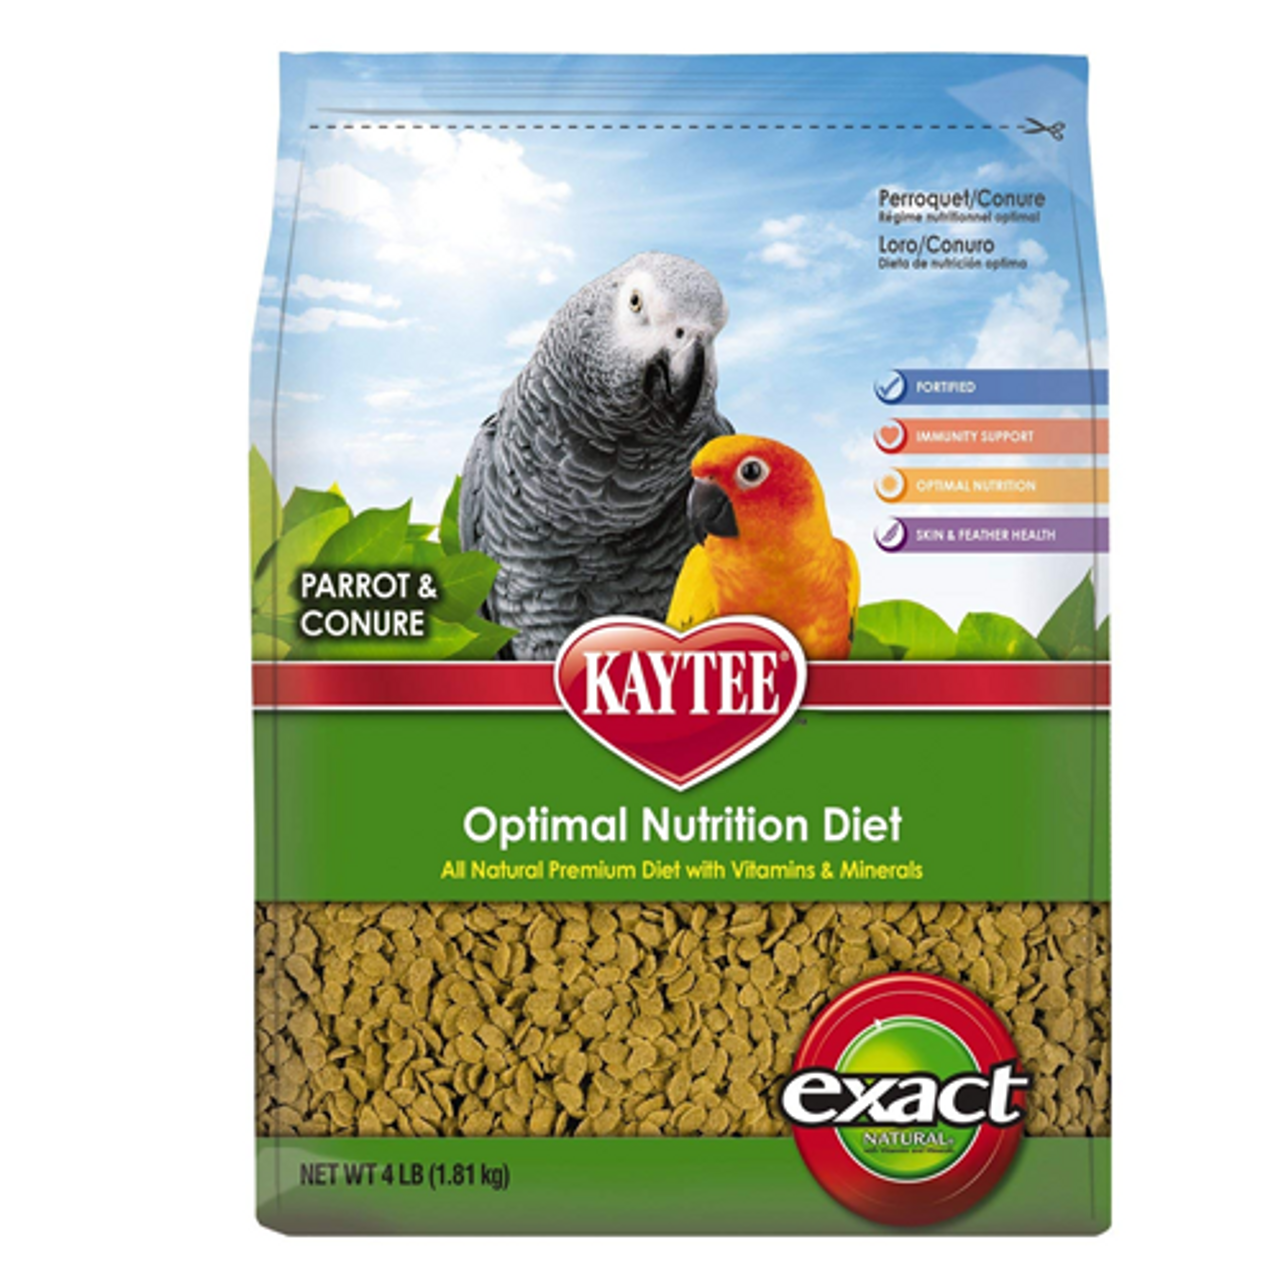 natural parrot food